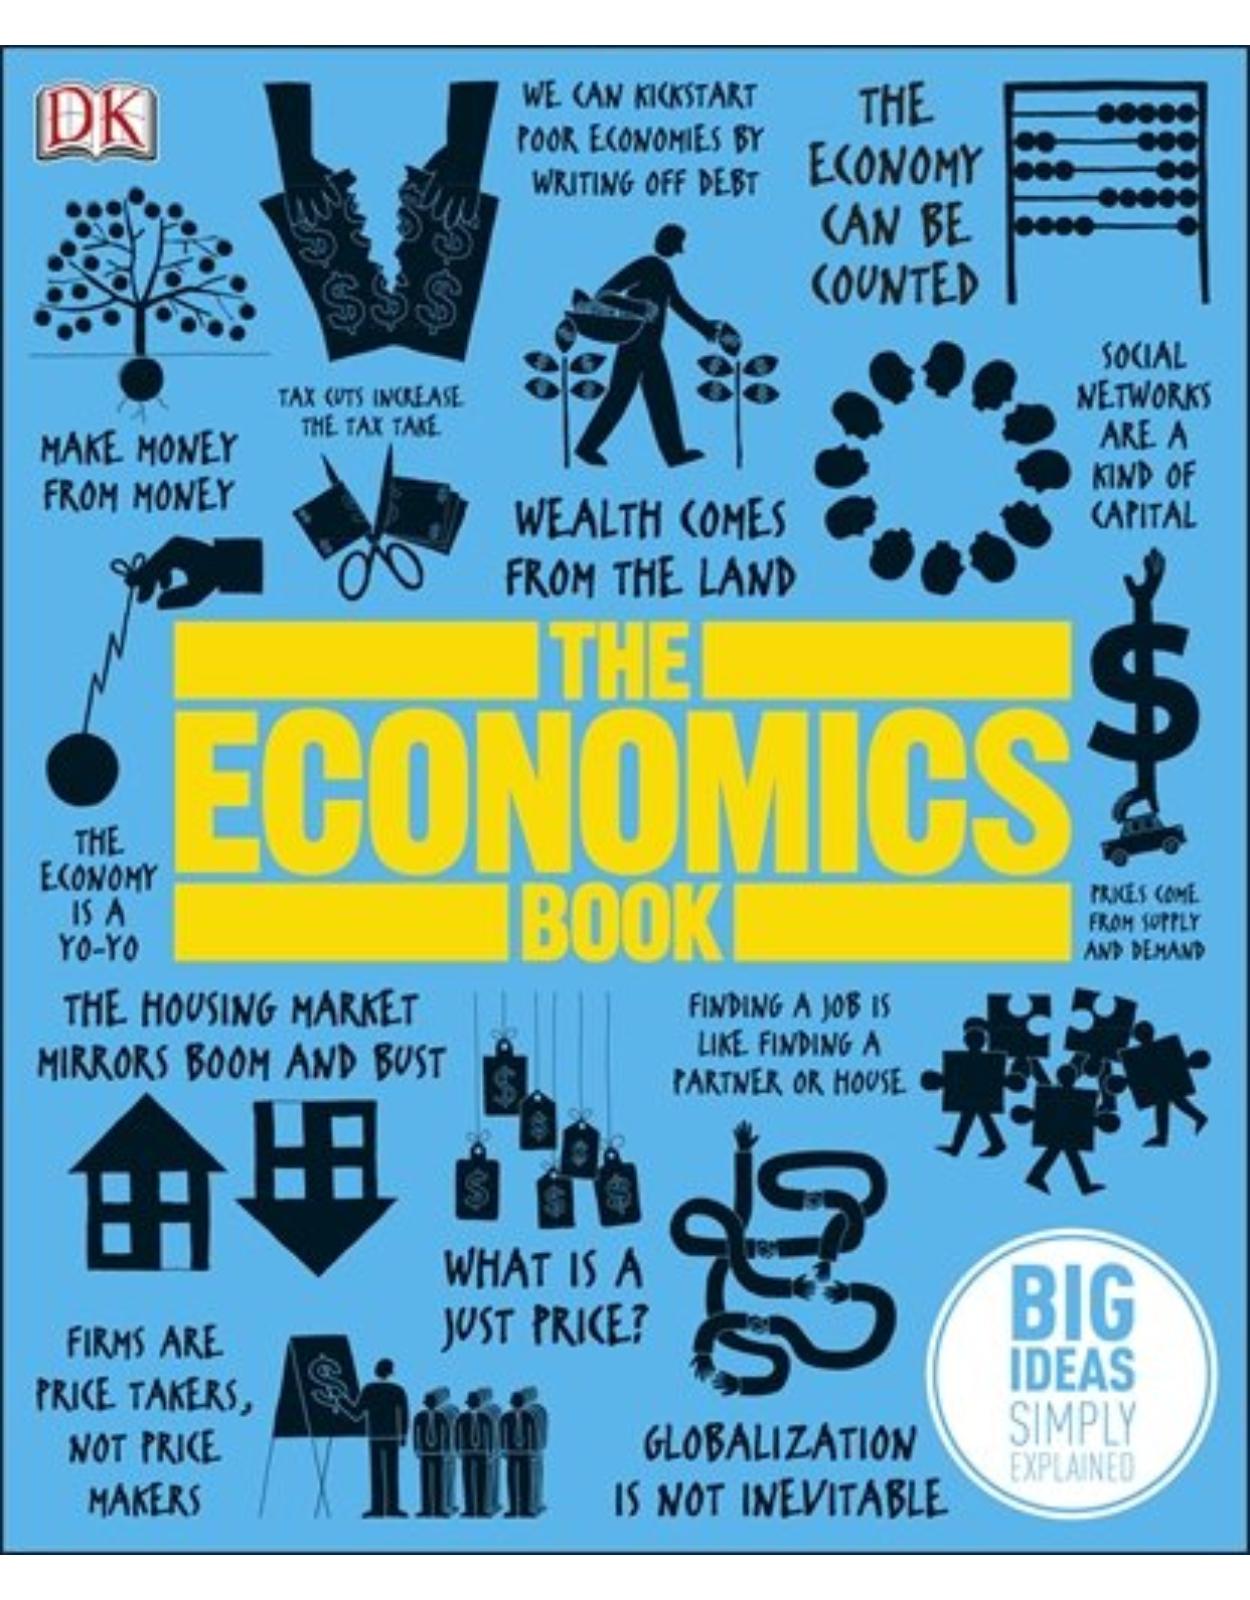 The Economics Book: Big ideas simply explained